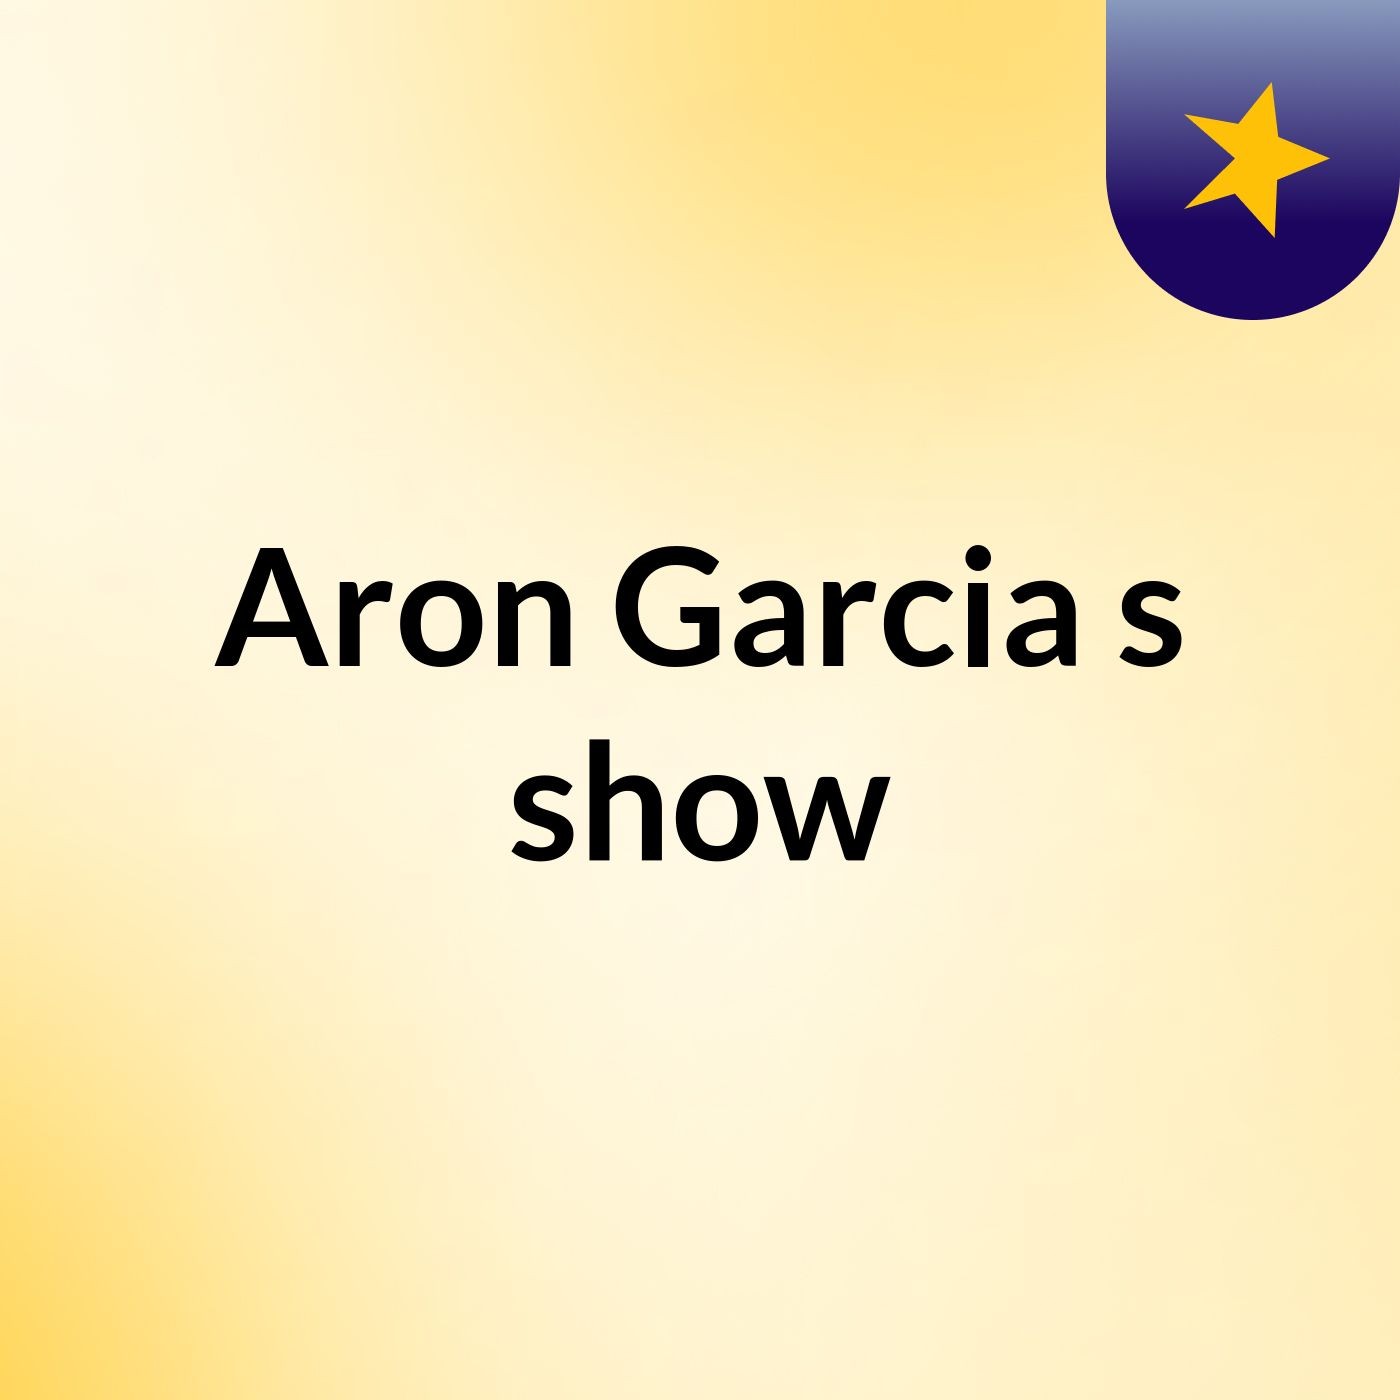 Aron Garcia's show